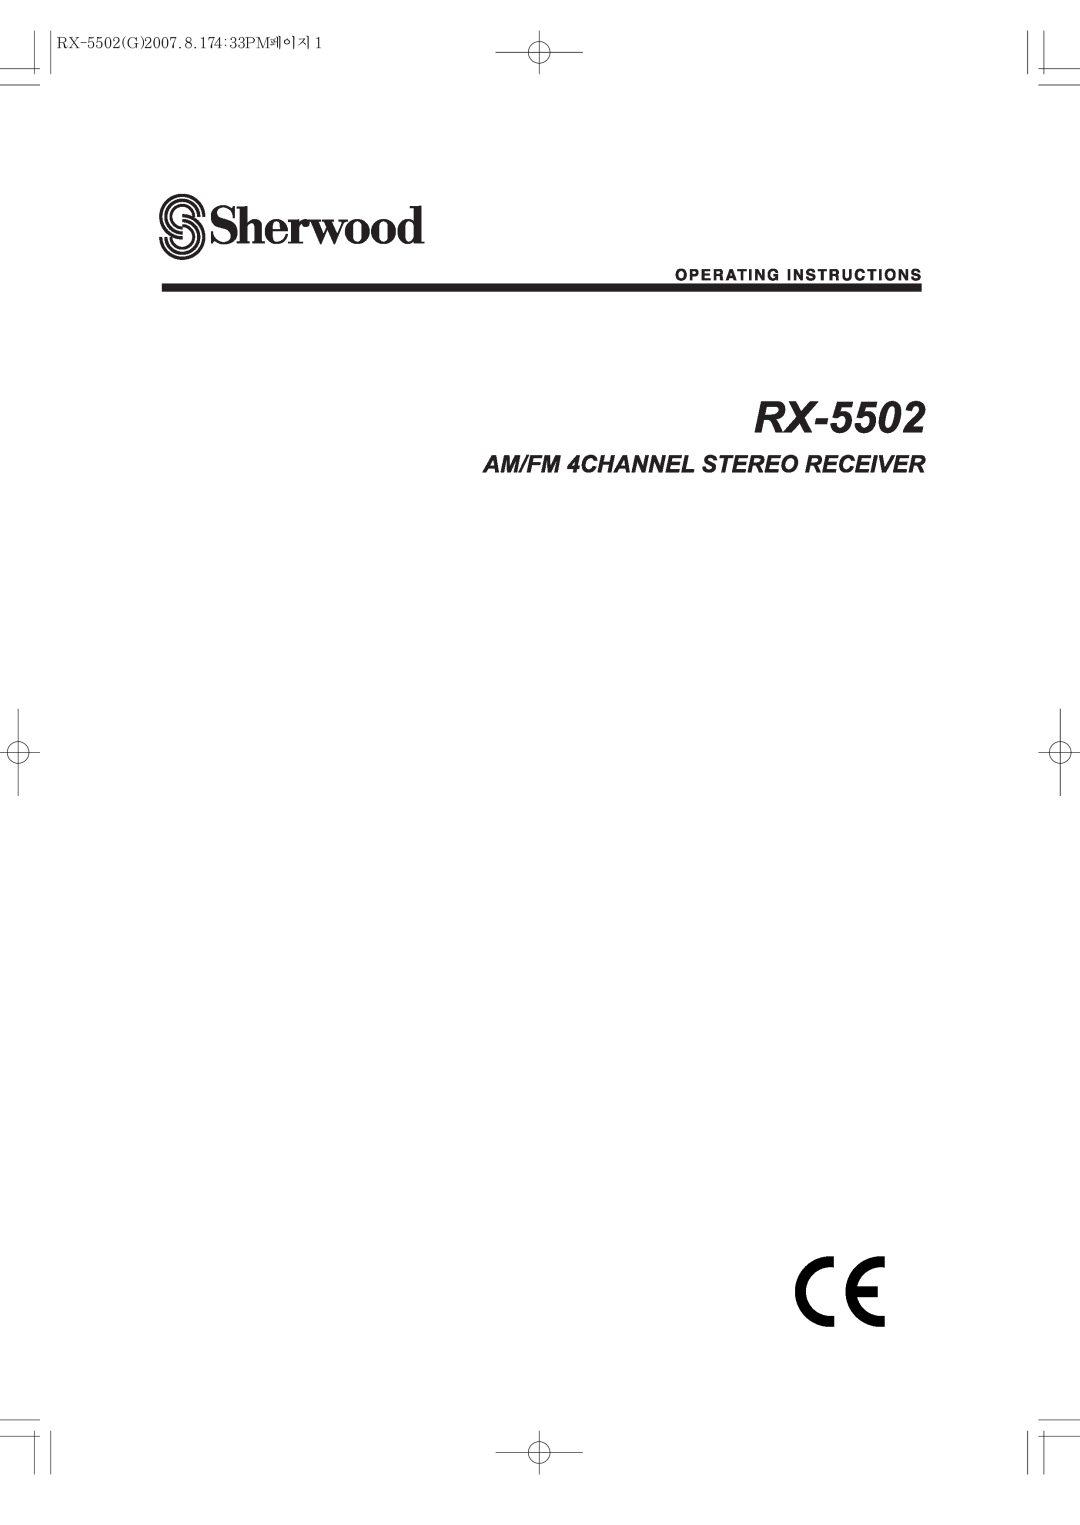 Sherwood manual RX-5502G2007.8.174 33PM페이지 